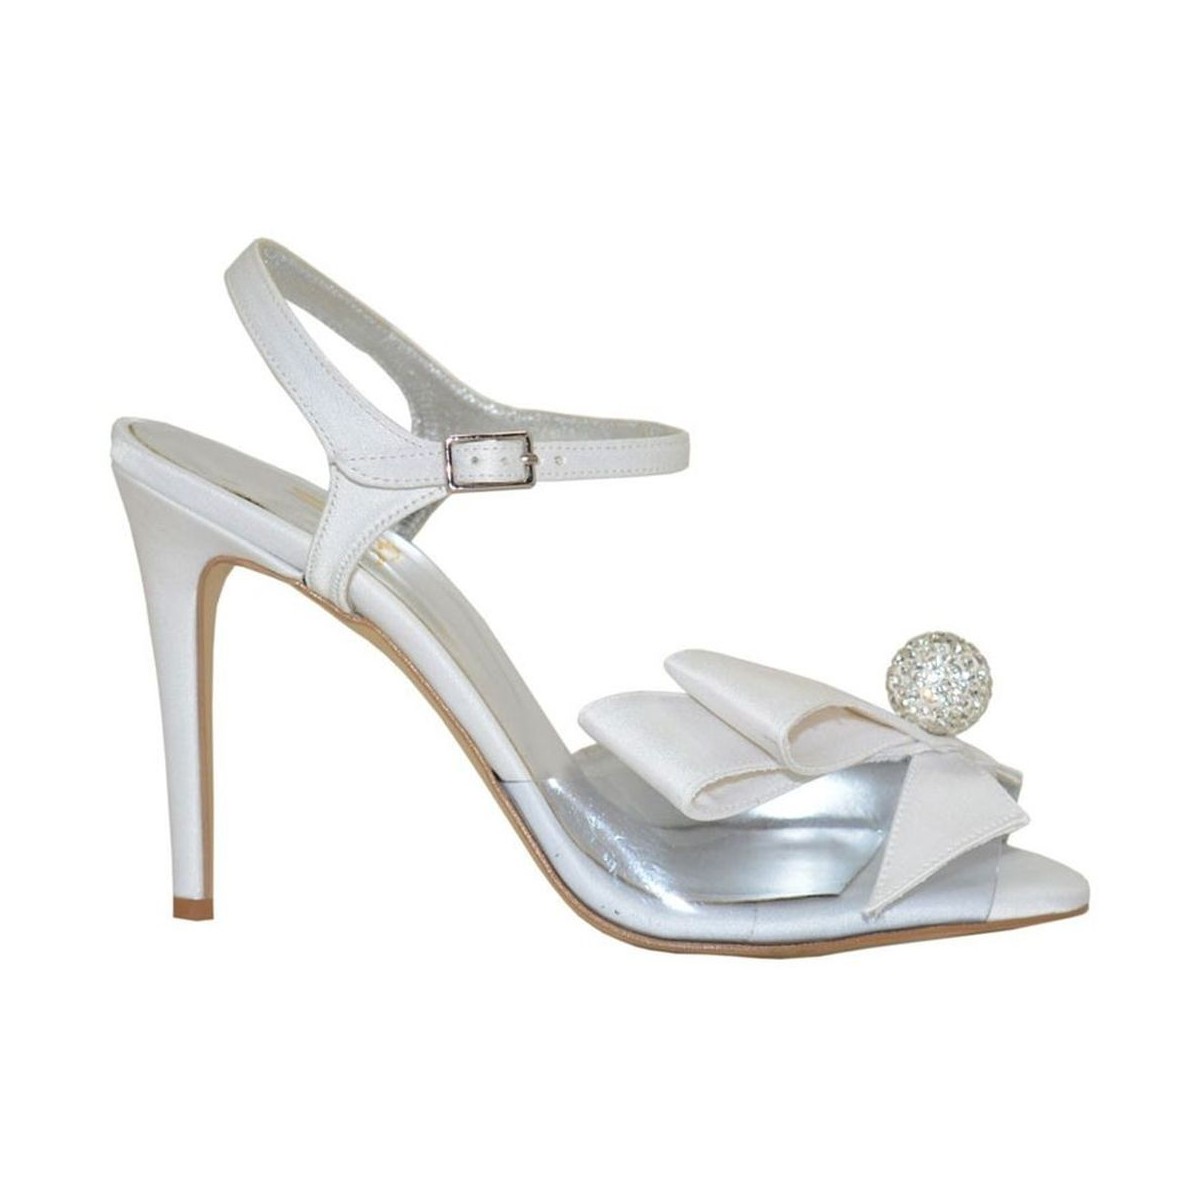 Lou bridal shoes Marilyn